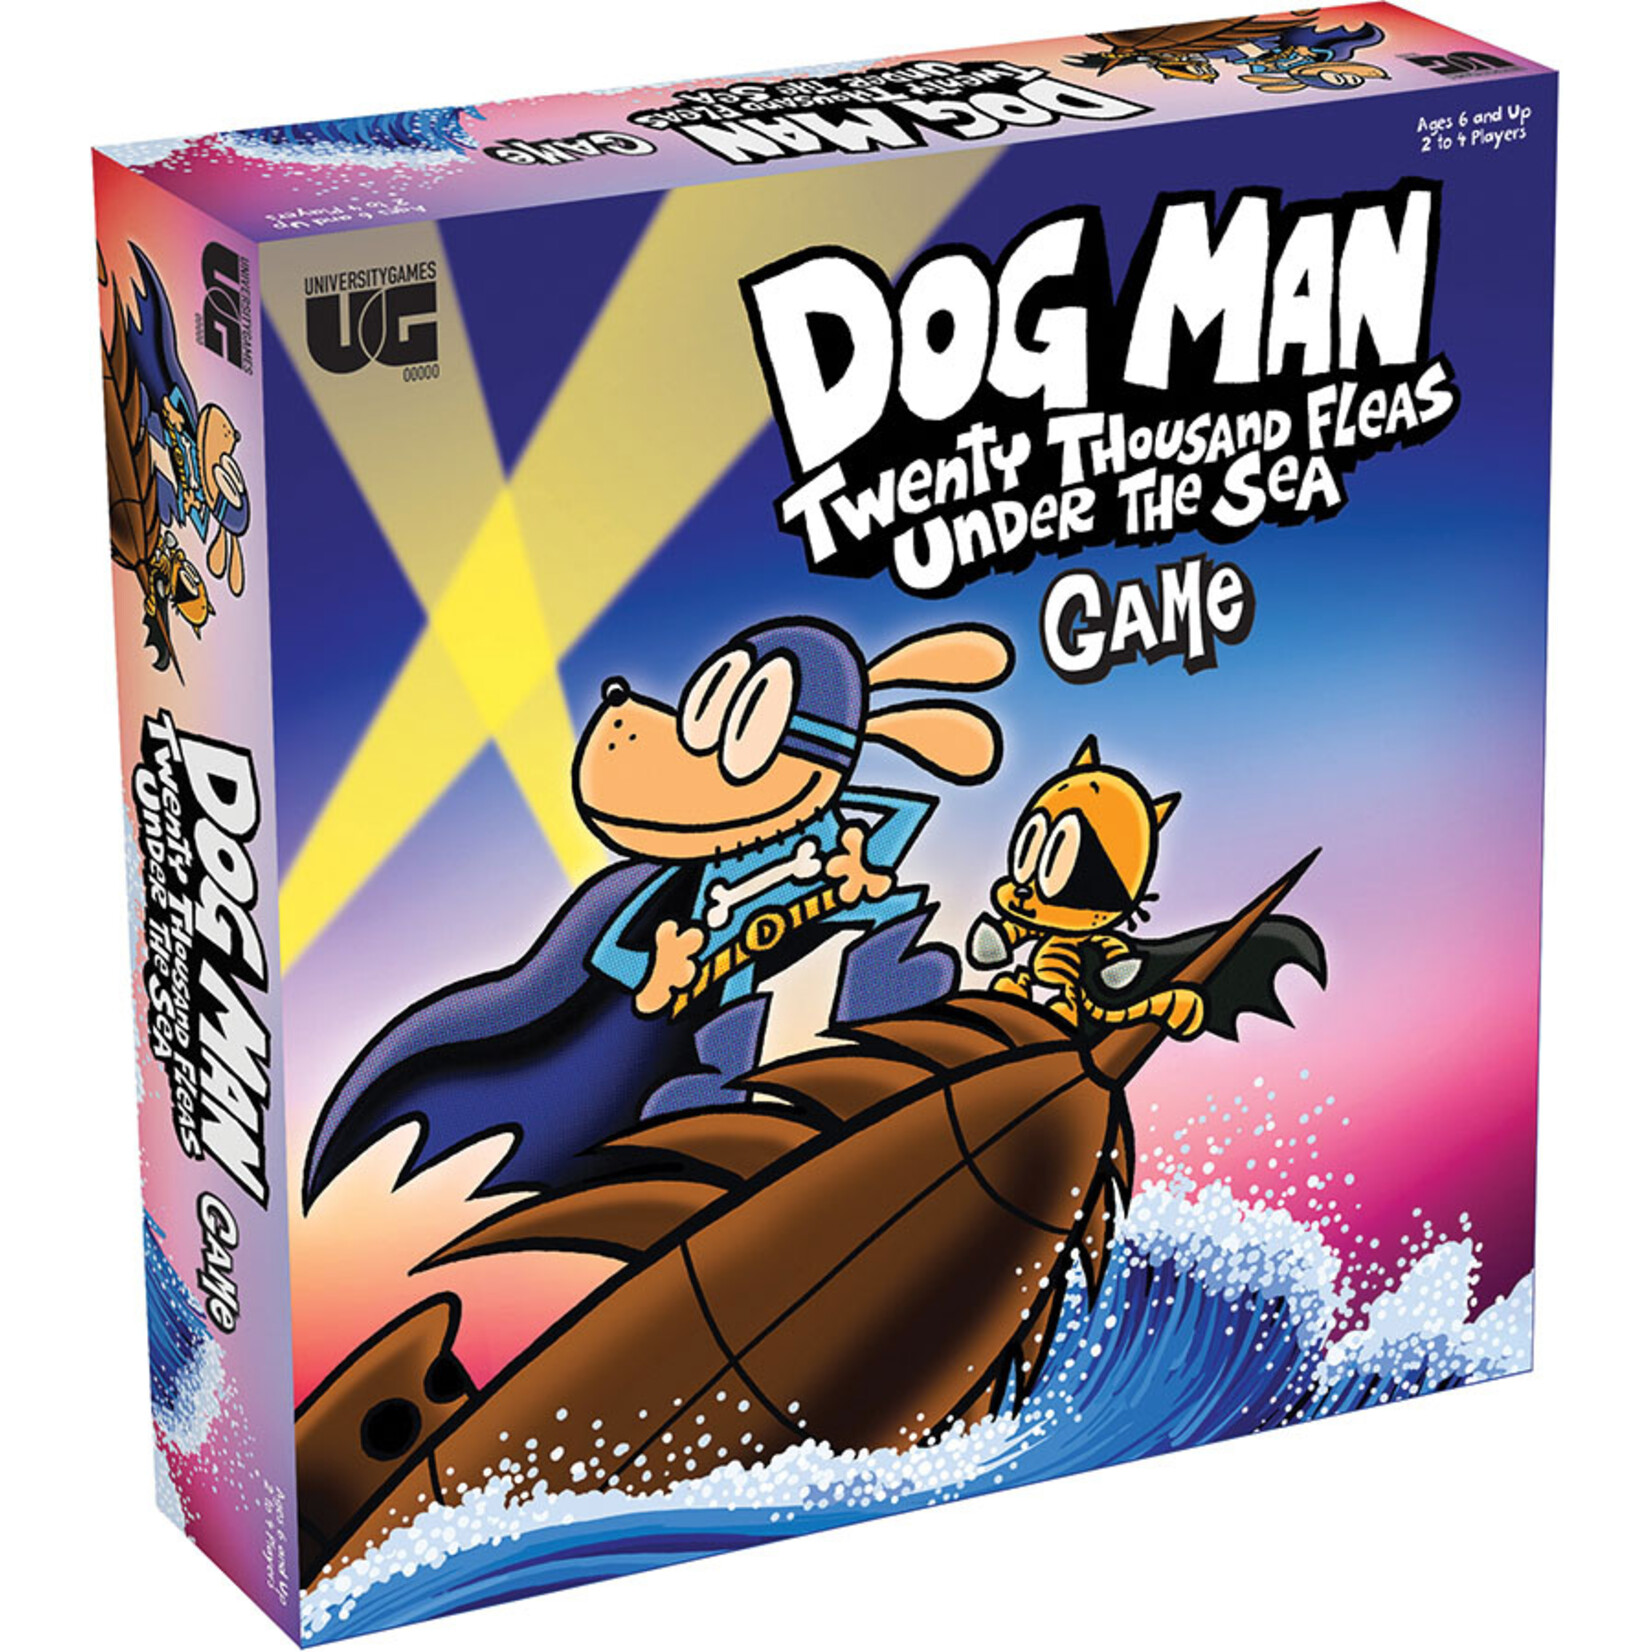 University Games Dog Man 20K Fleas Under the Sea Game